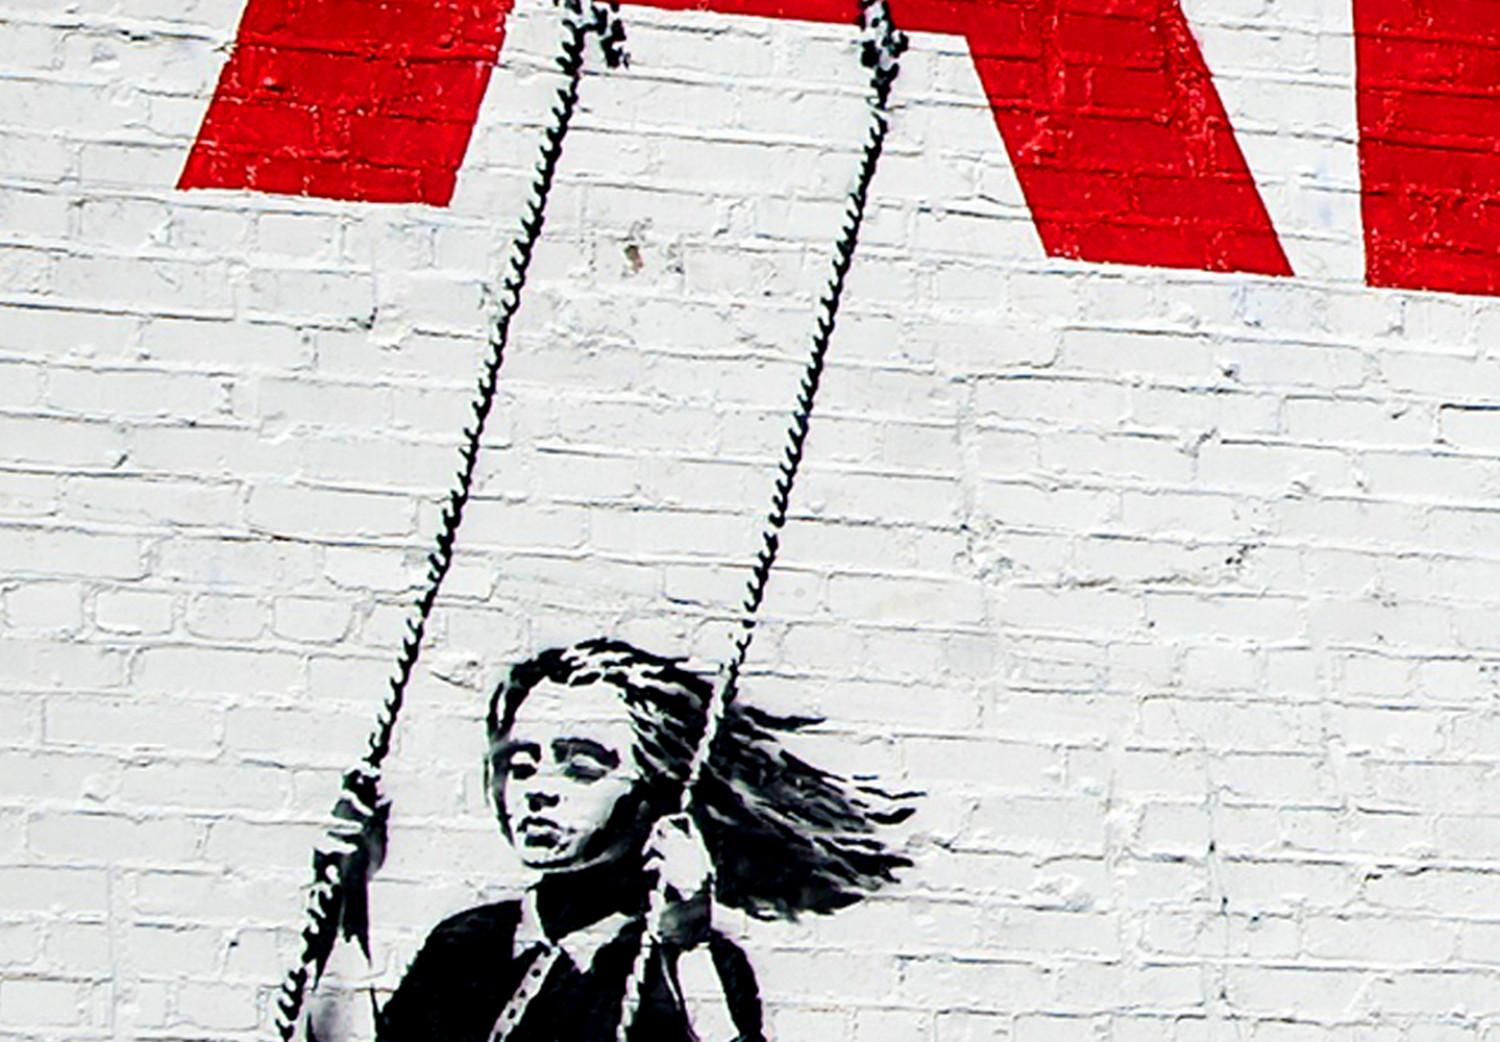 Cuadro XXL Parking Girl Swing by Banksy [Large Format]